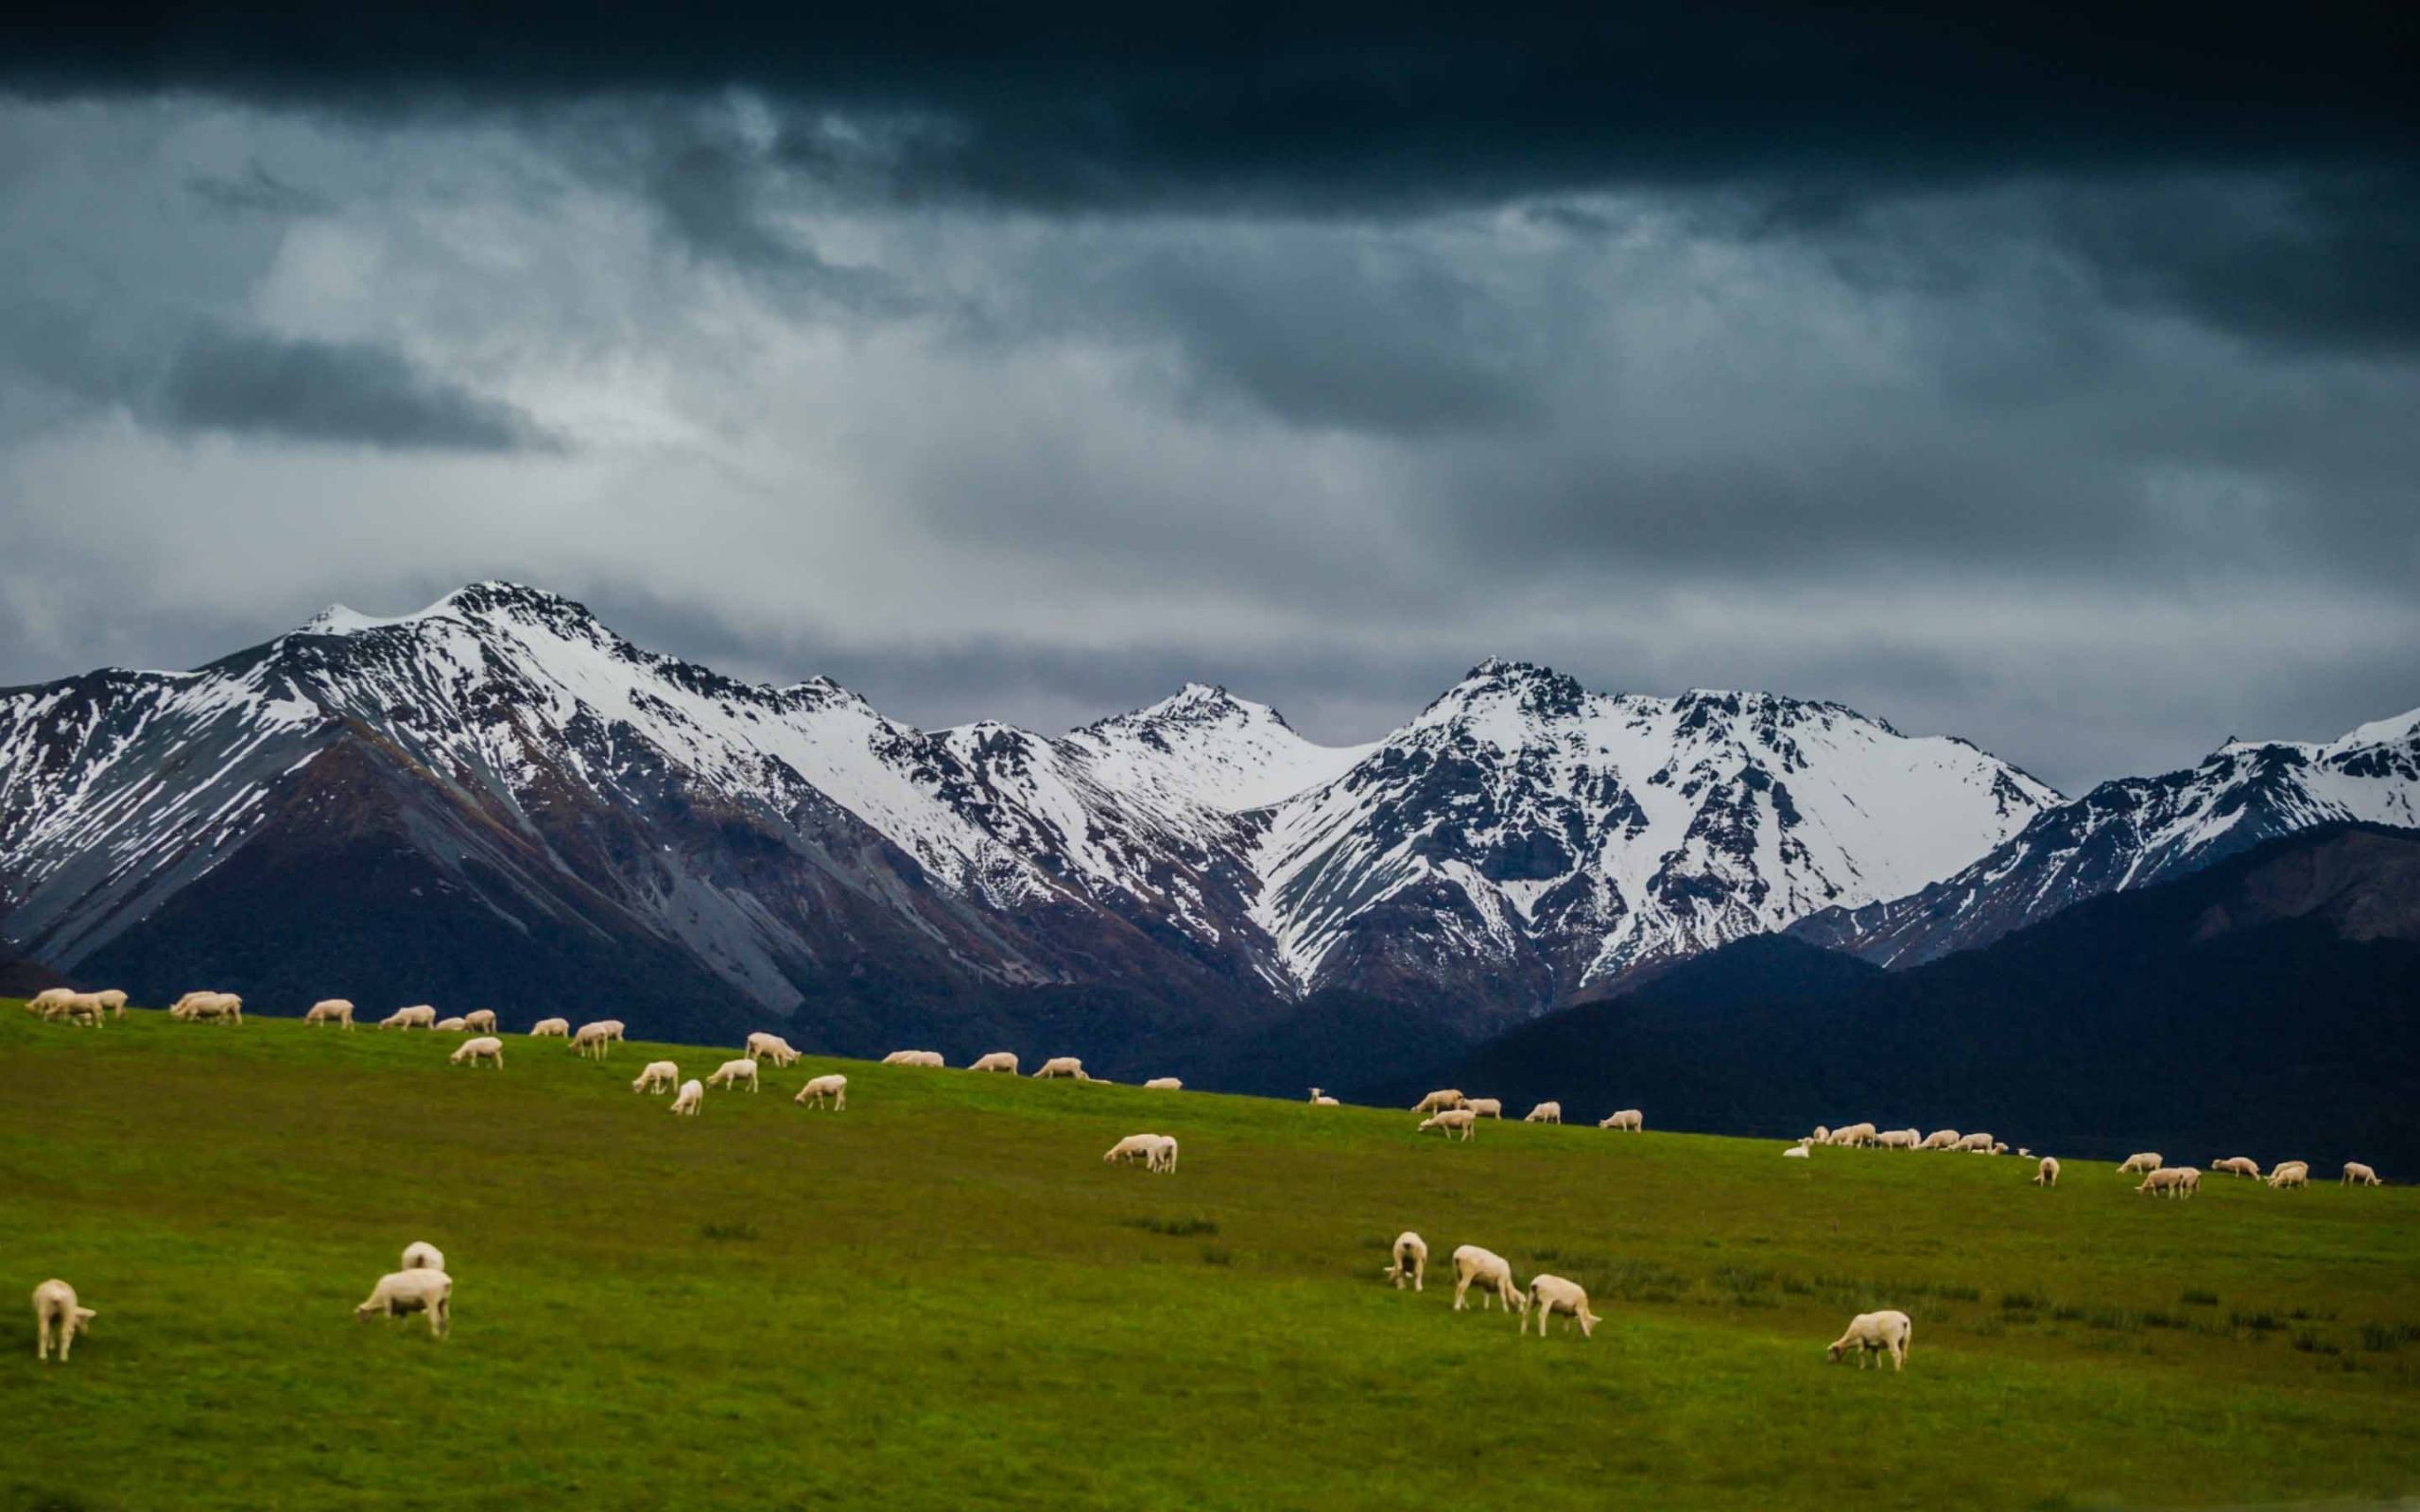 Sheep On Mountain pasture MacBook Air Wallpaper Download